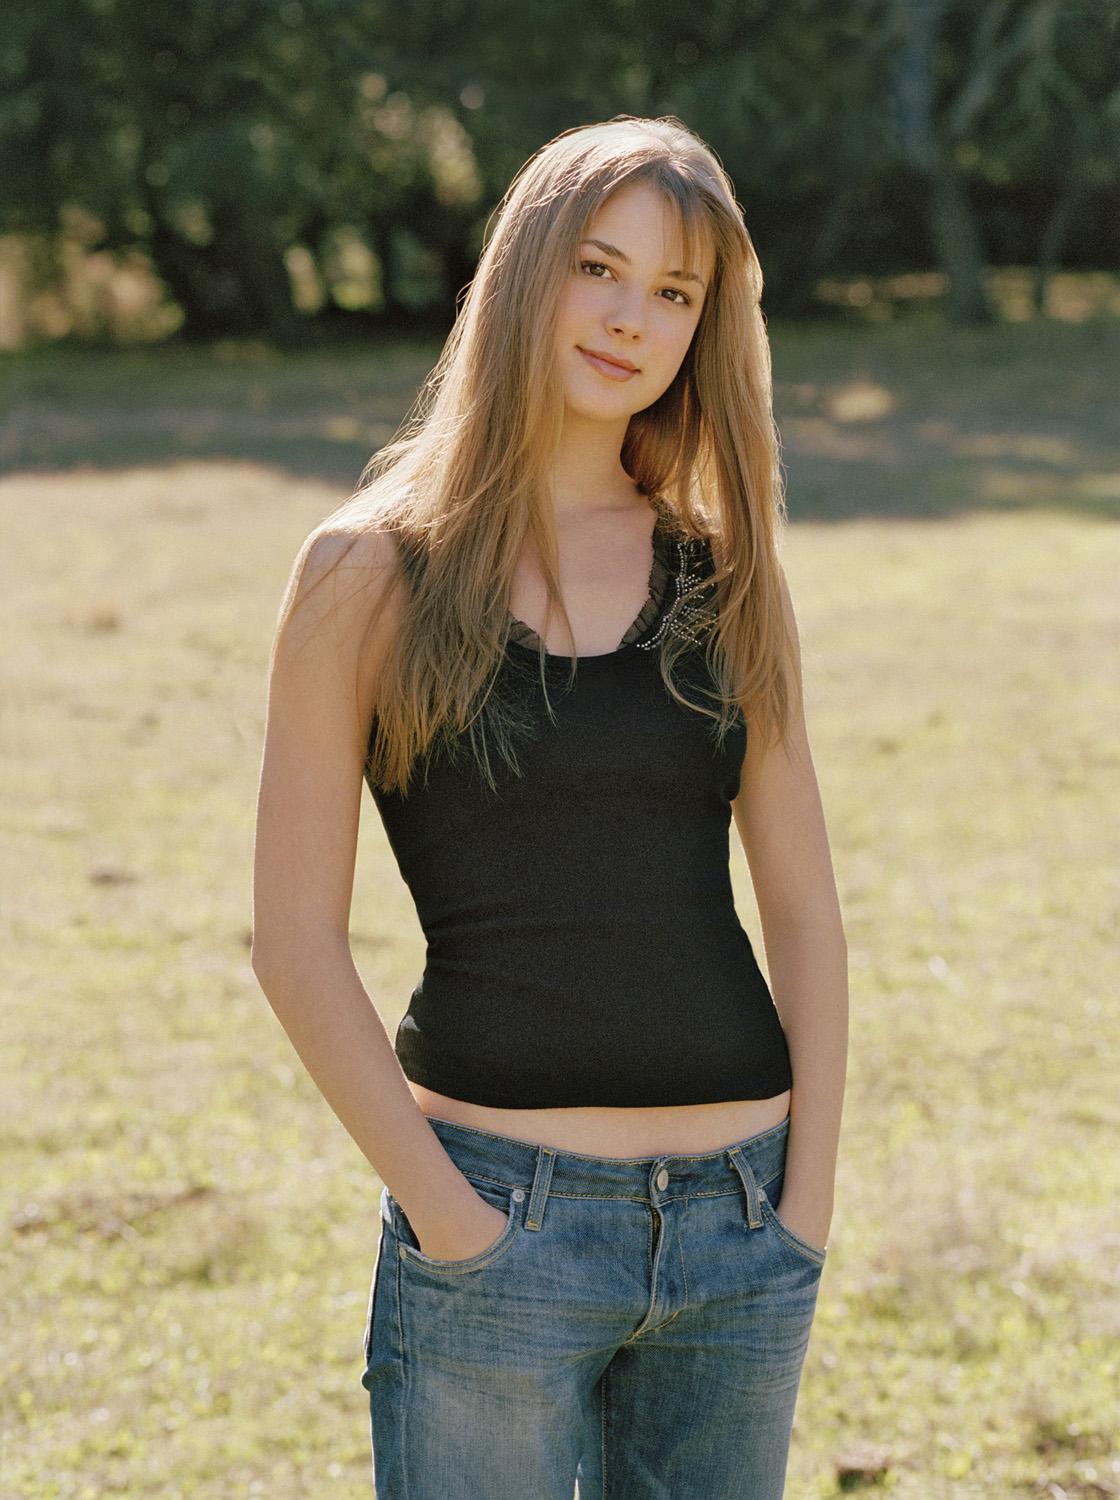 Emily Vancamp Women Actress Jeans Long Hair Hands In Pockets Grass Canadian 1120x1500